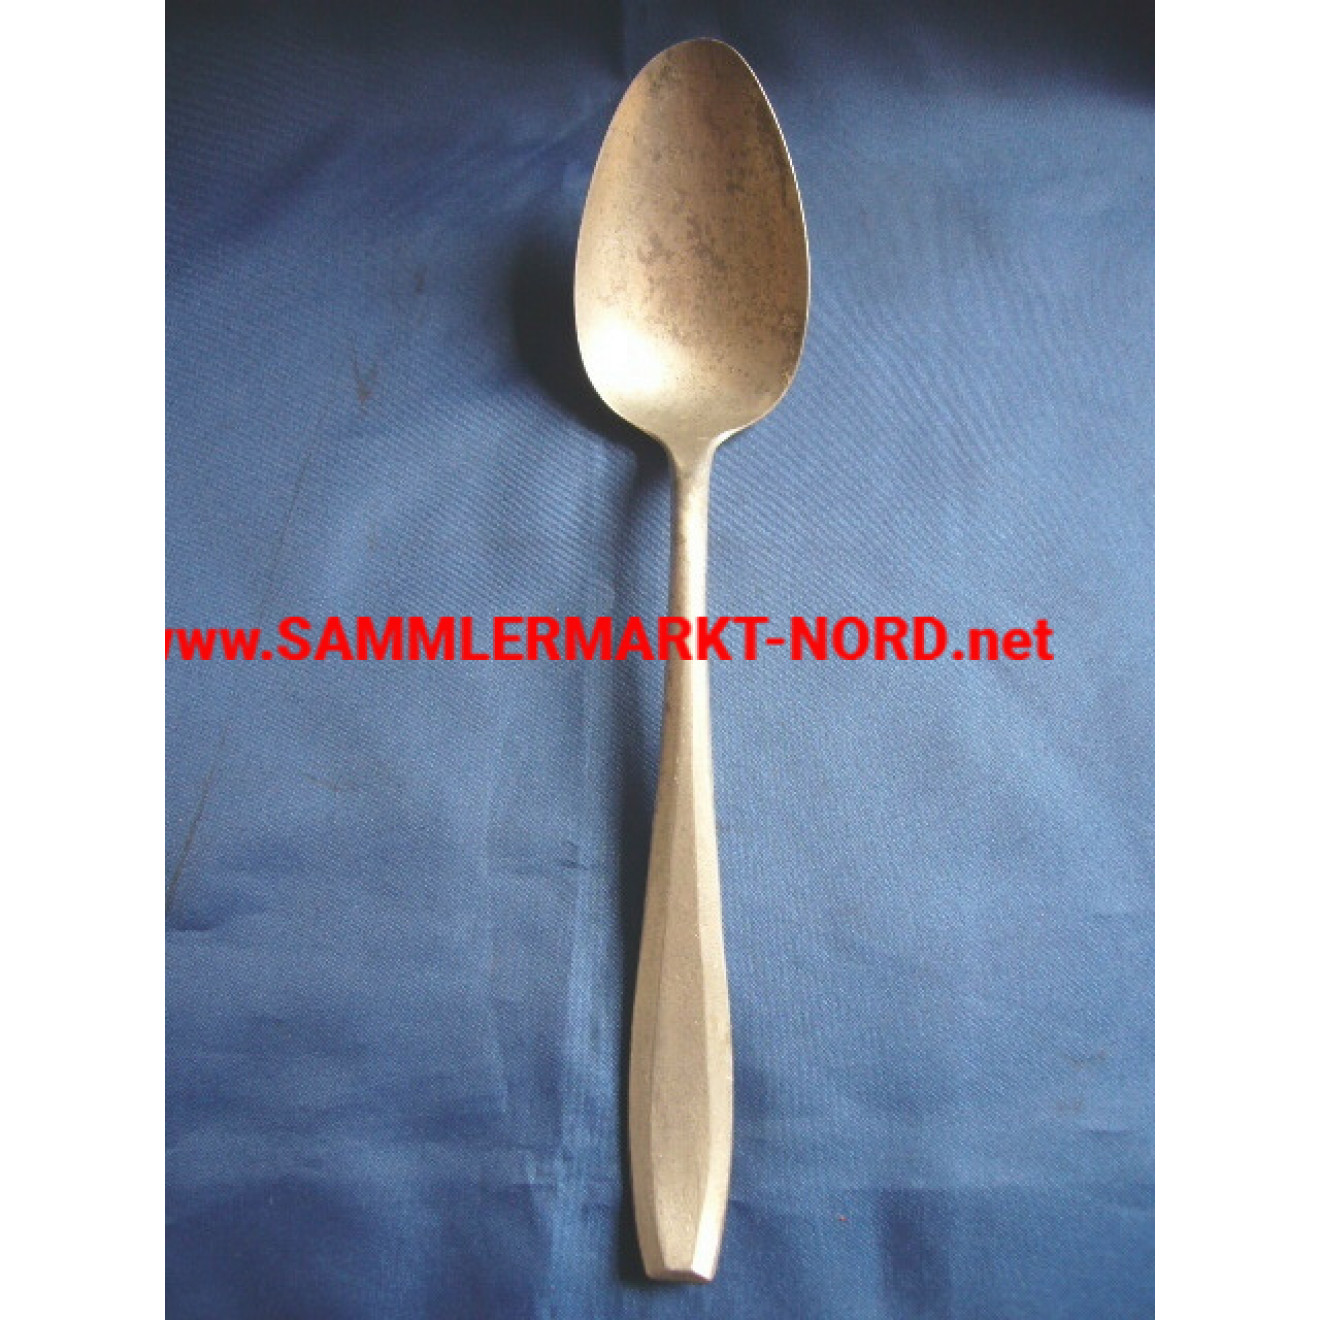 Large RAD potato spoon